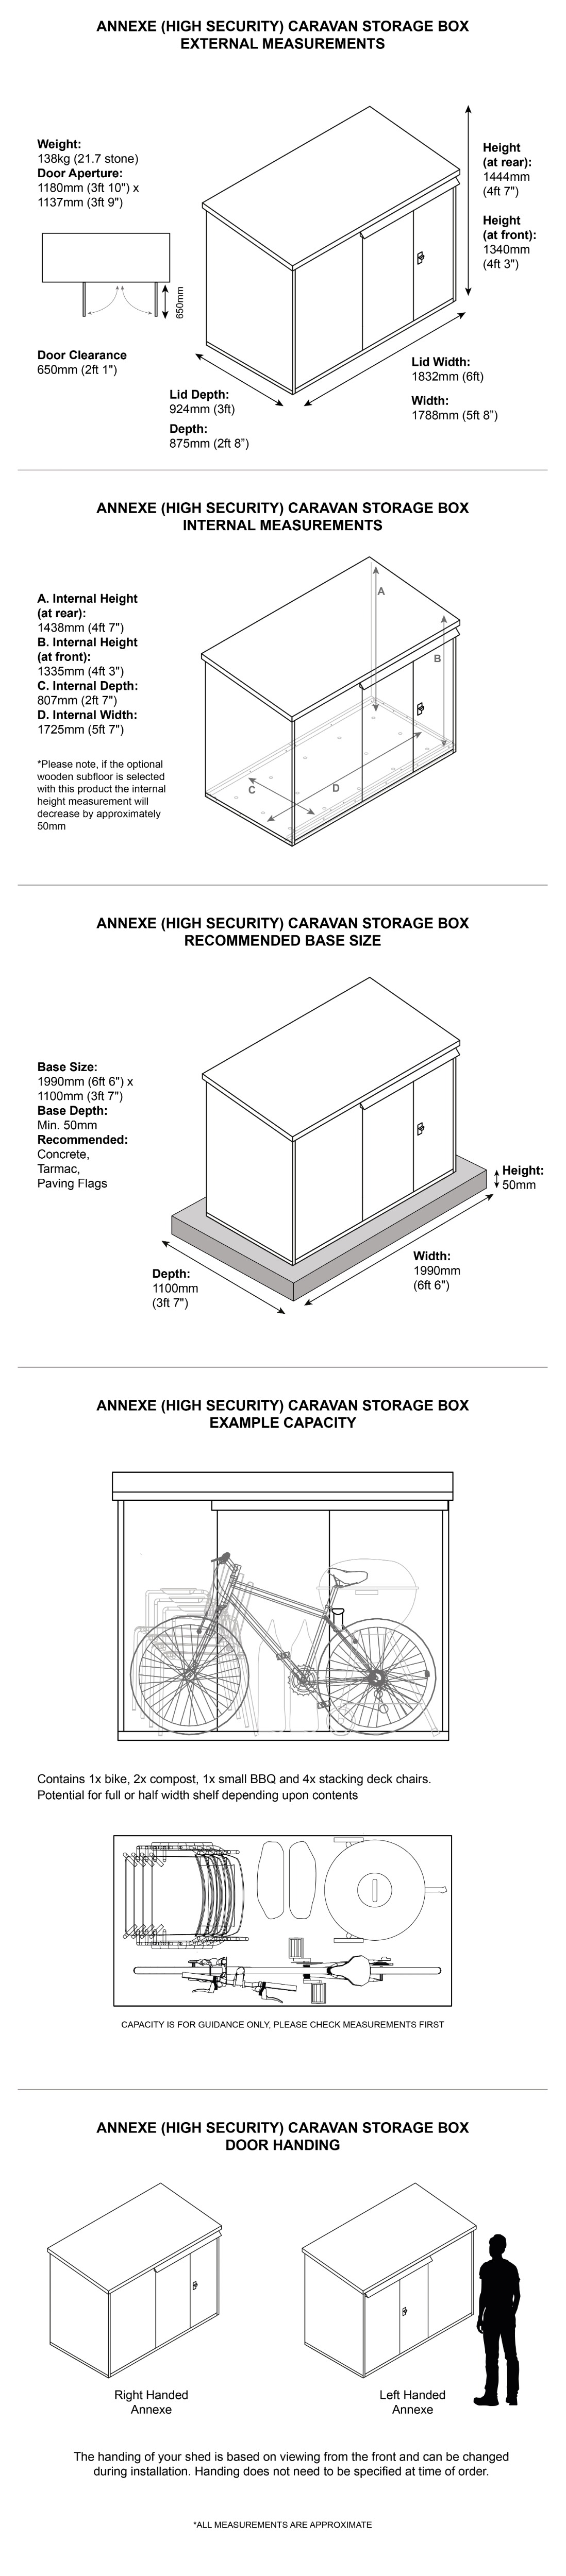 high security caravan storage box - dimensions